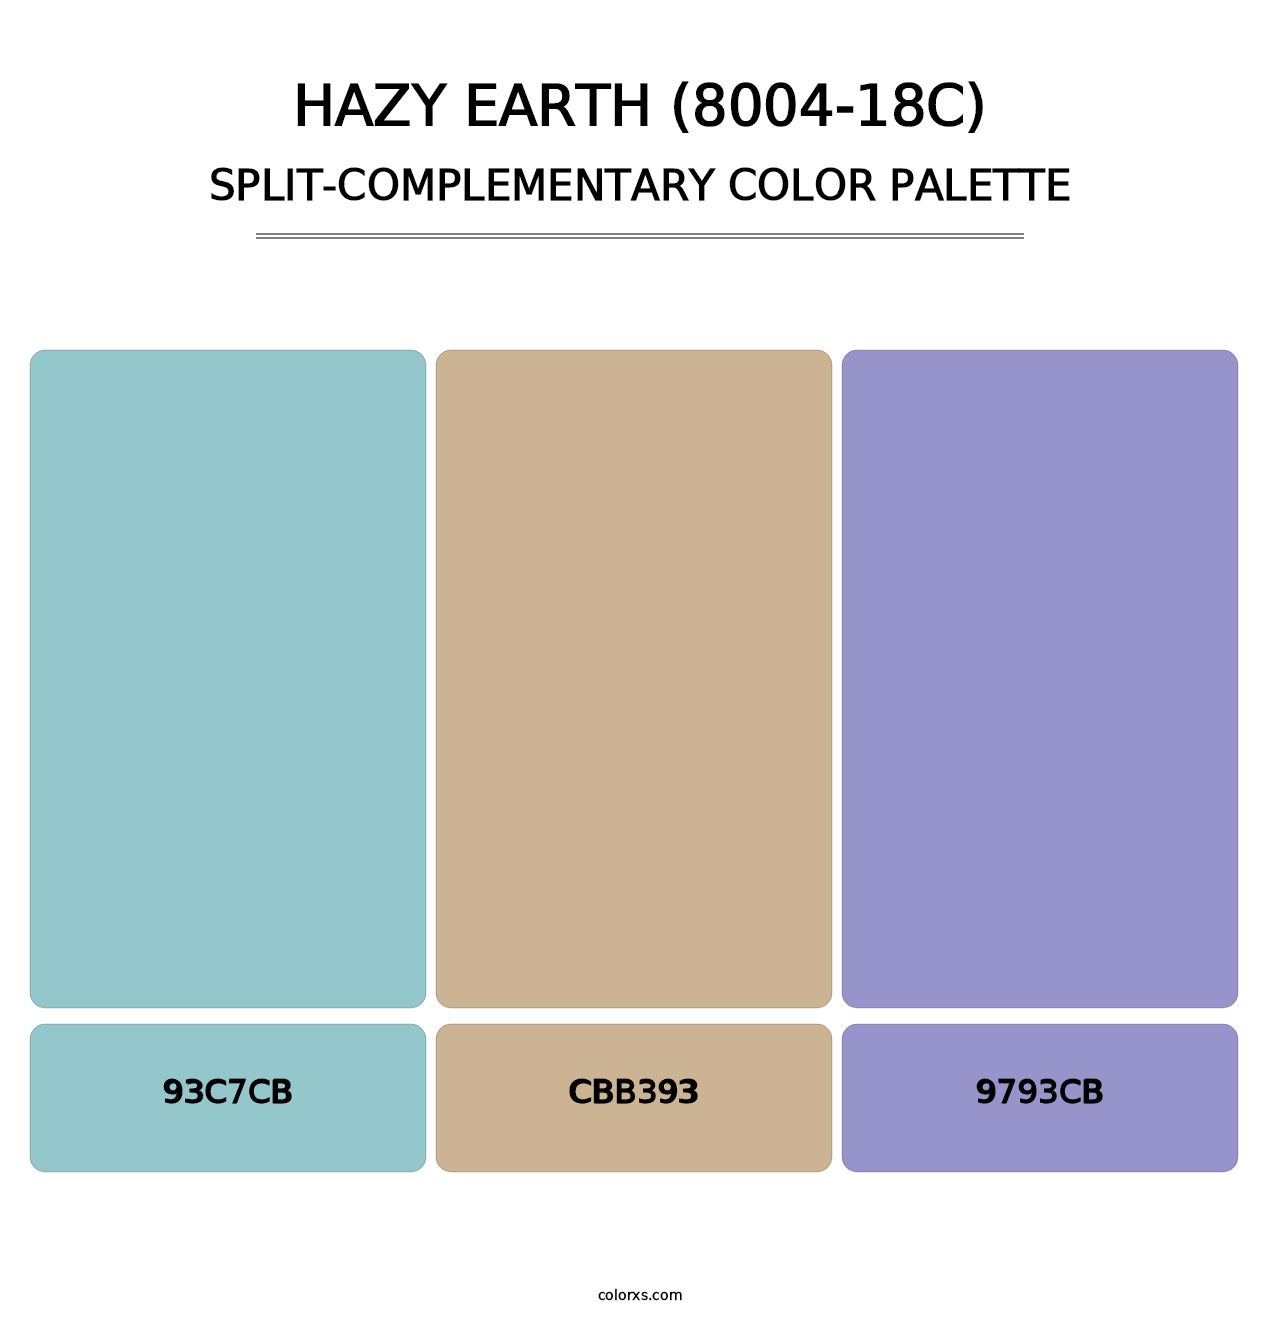 Hazy Earth (8004-18C) - Split-Complementary Color Palette